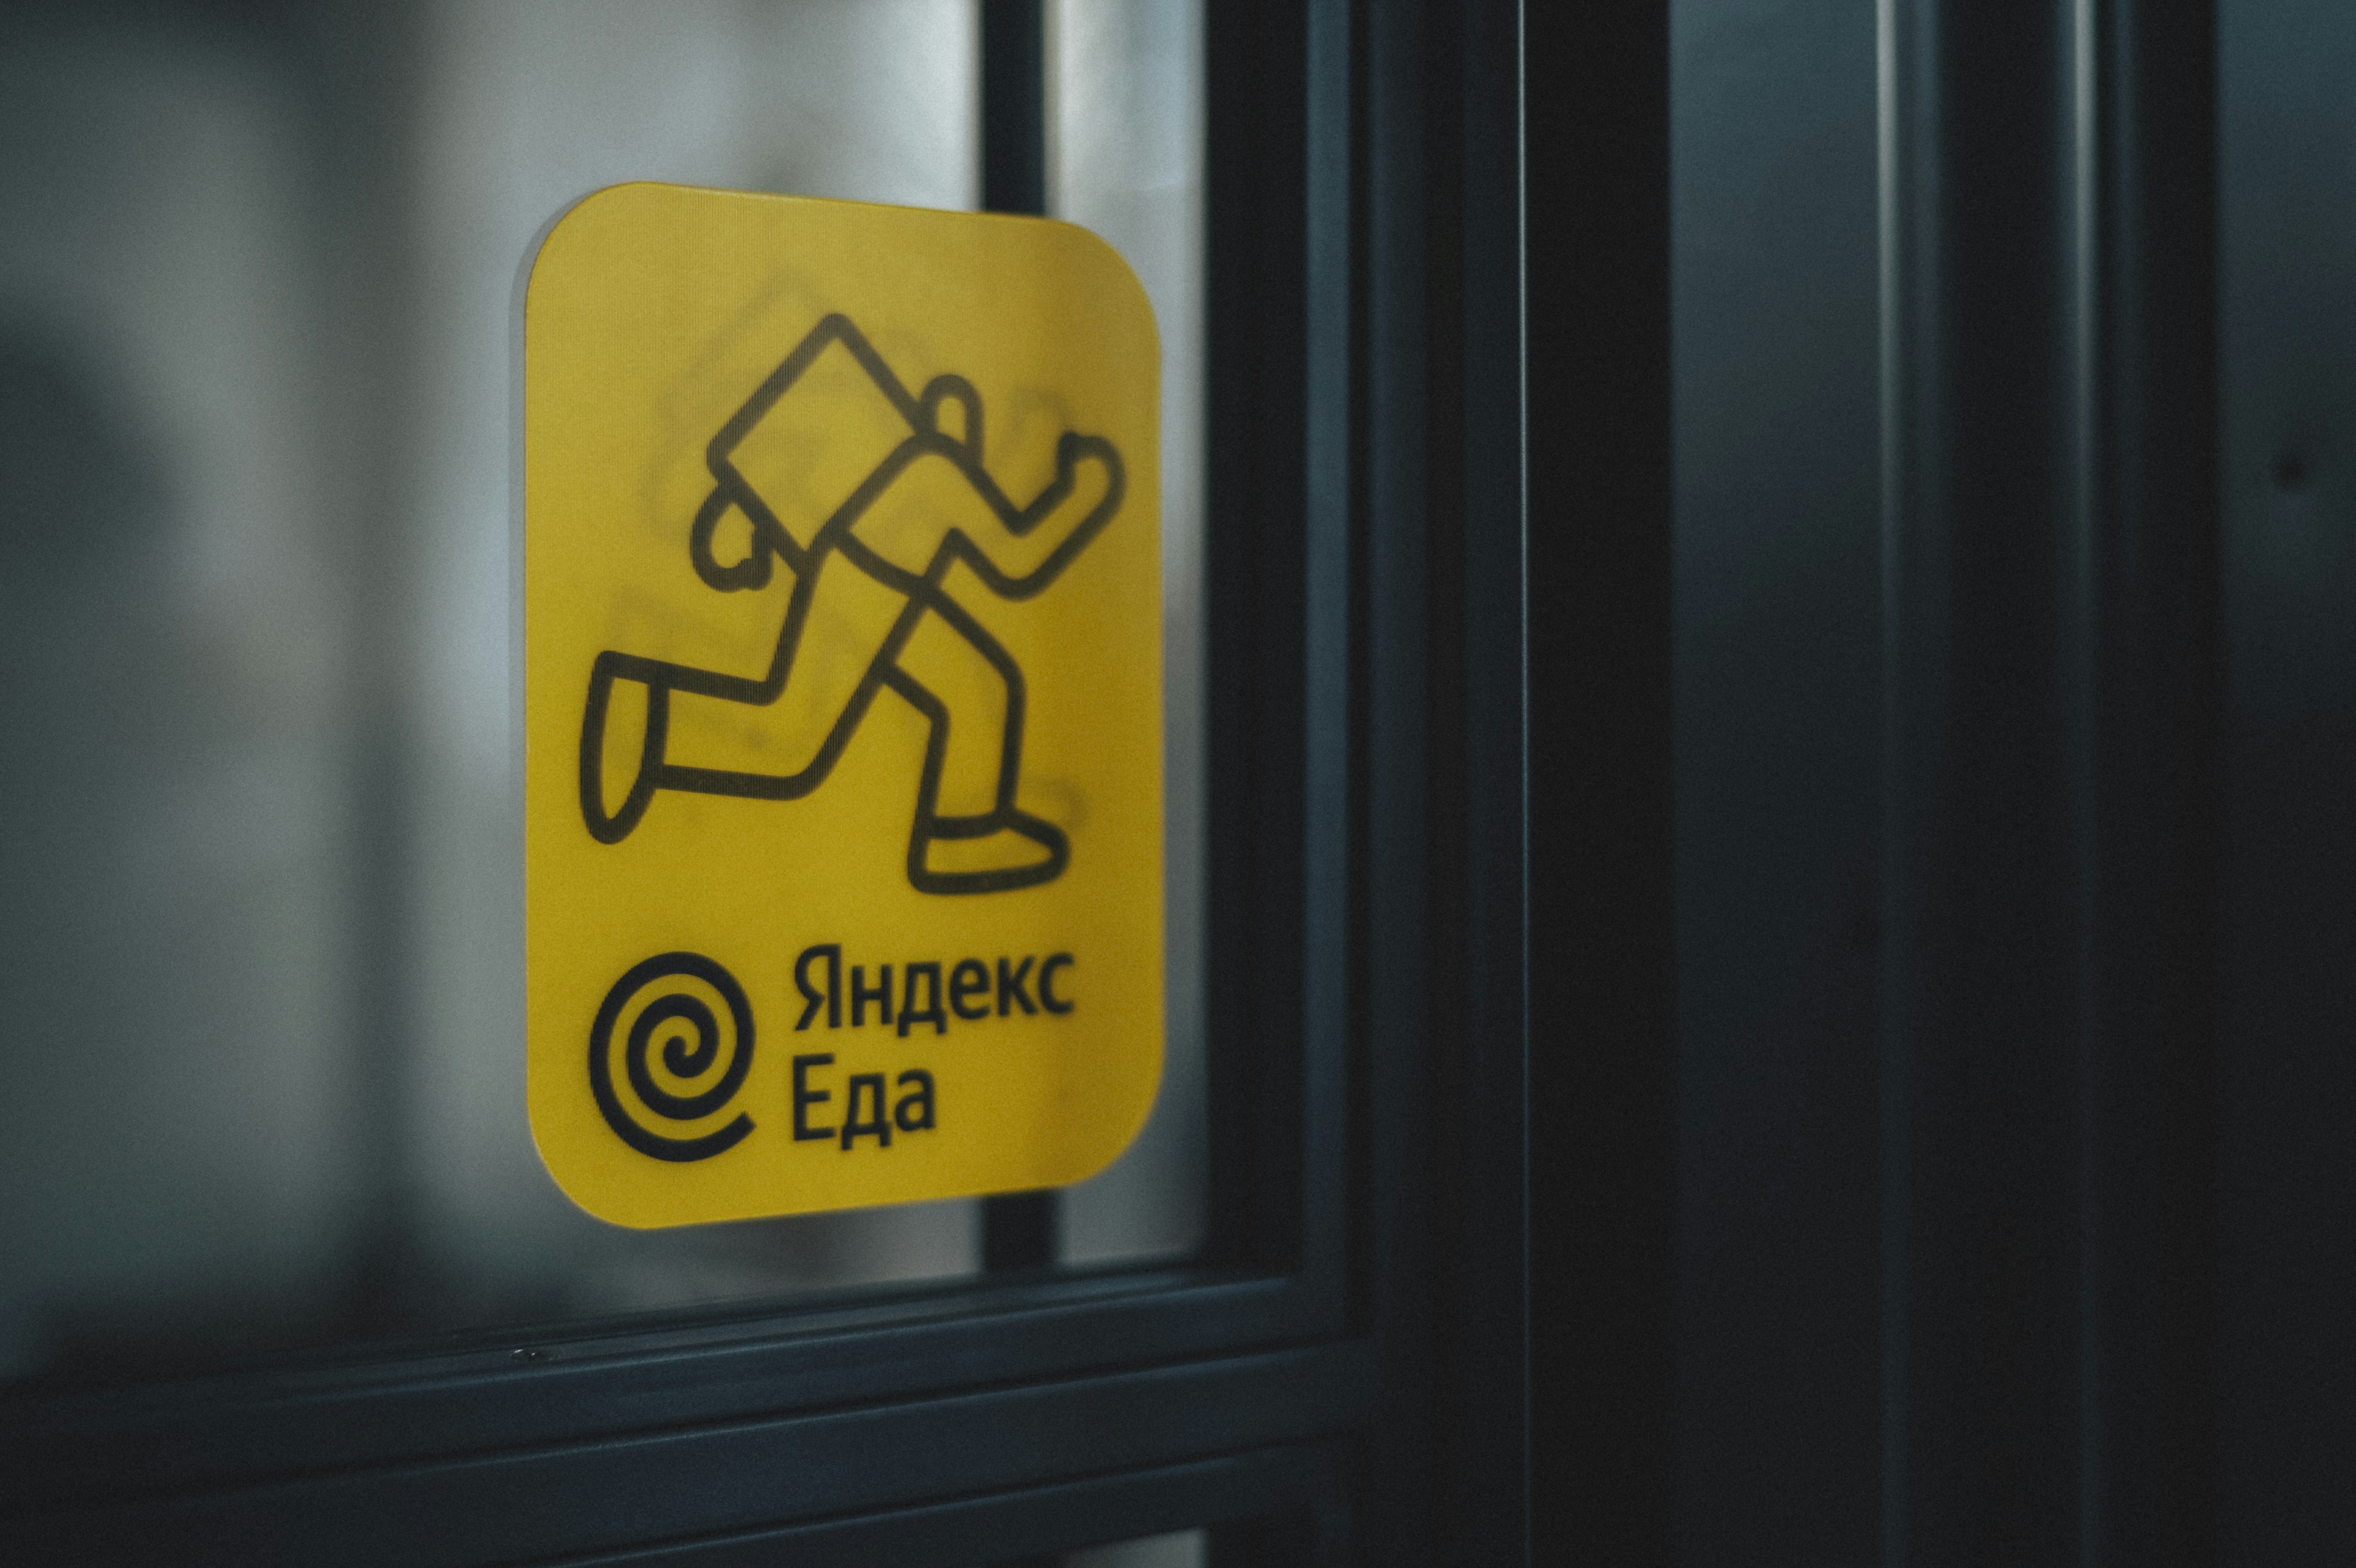 Yandex Food service sticker on the door of the restaurant.